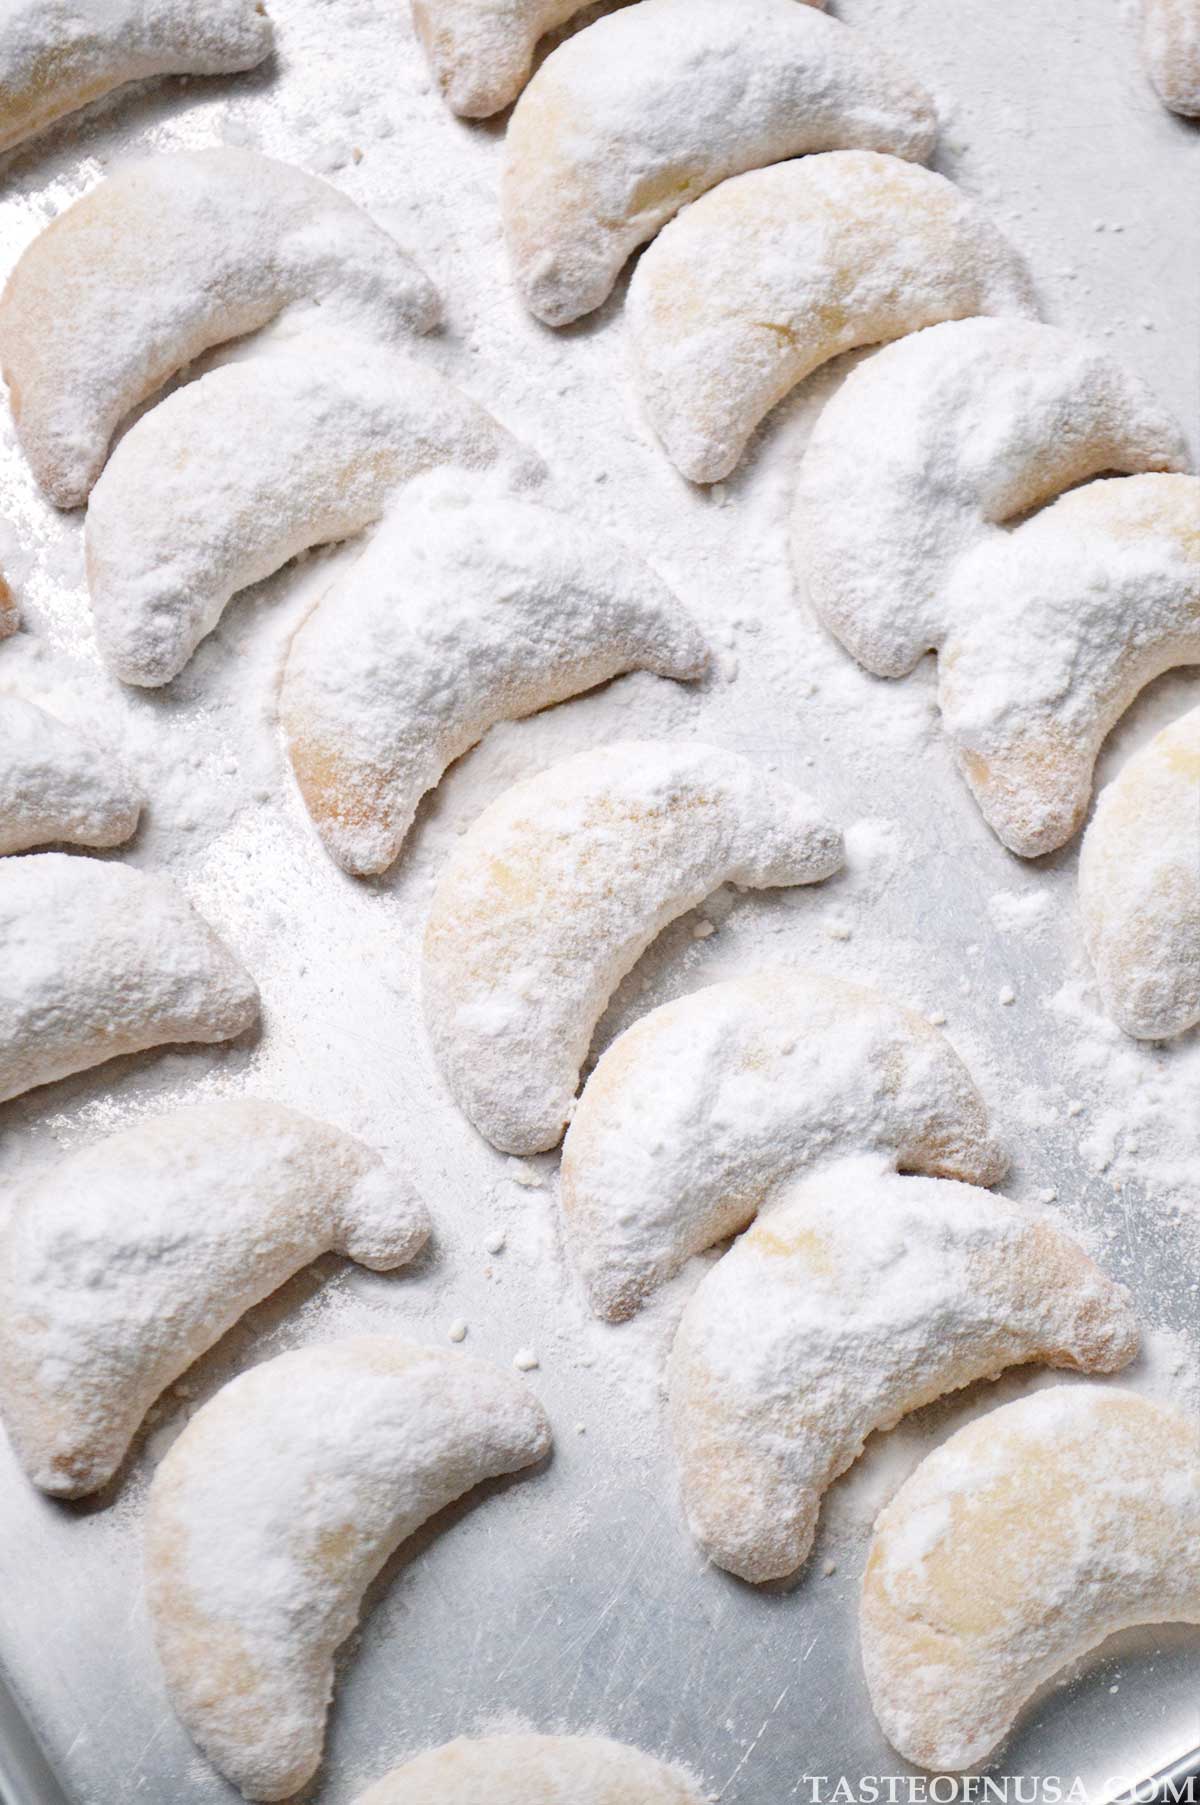 kue putri salju or snow white cookies or snowball cookies made with ground cashews